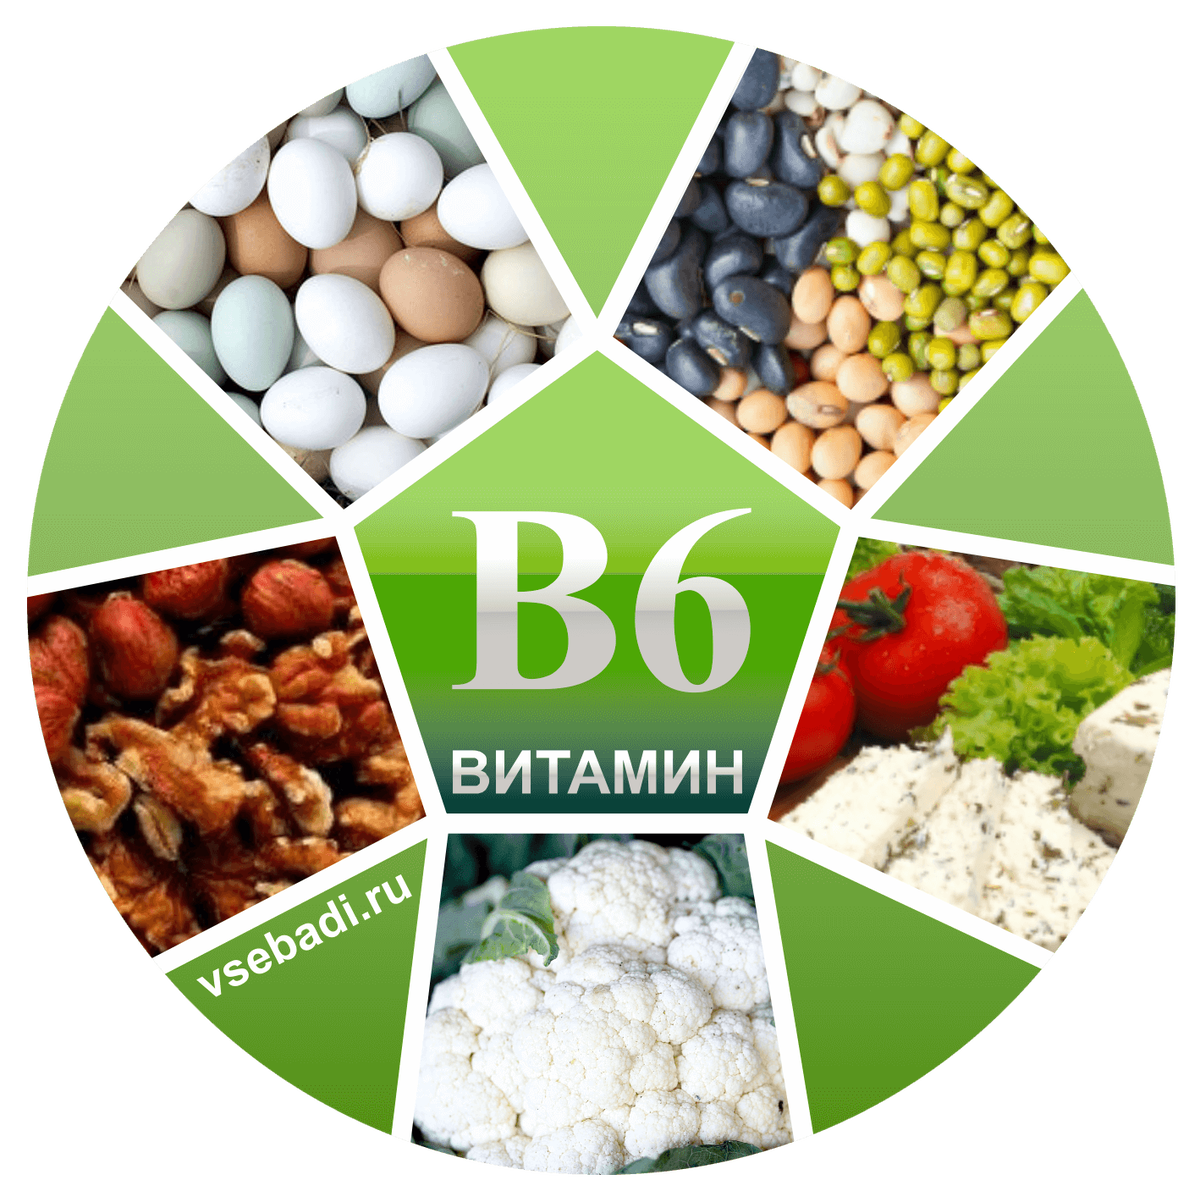 Витамин b6 название витамина. Витамины группы б6. Витамин b6 пиридоксин. Витамин b6 источники витамина.